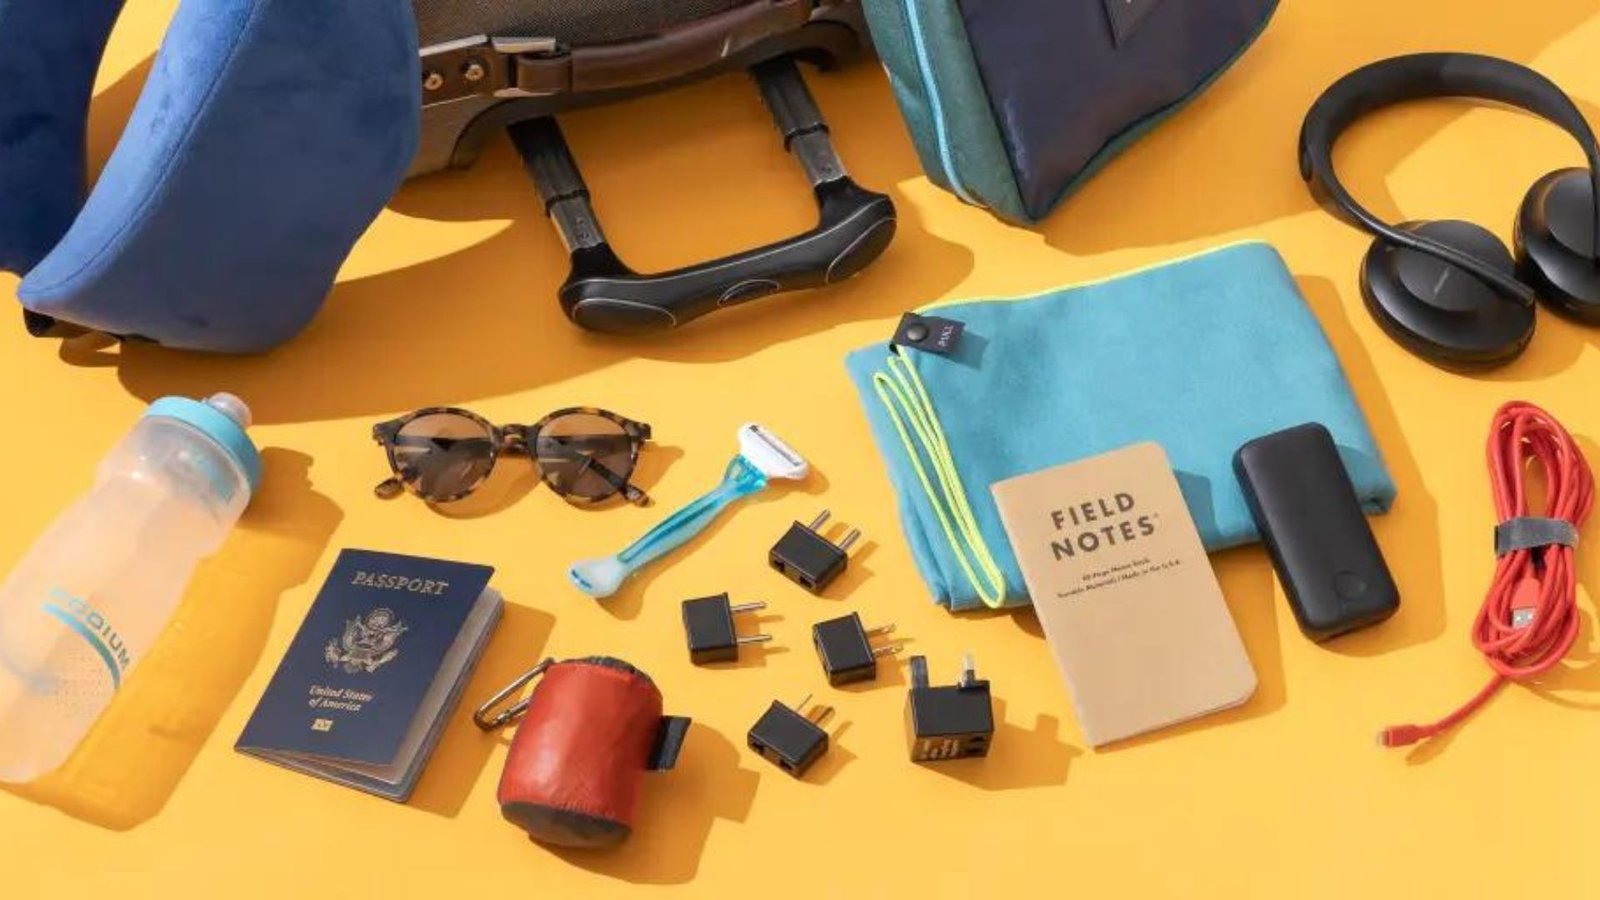 a passport, headphones, juice bottle, charger, monarch bag, etc showing travel gear and gadgets 